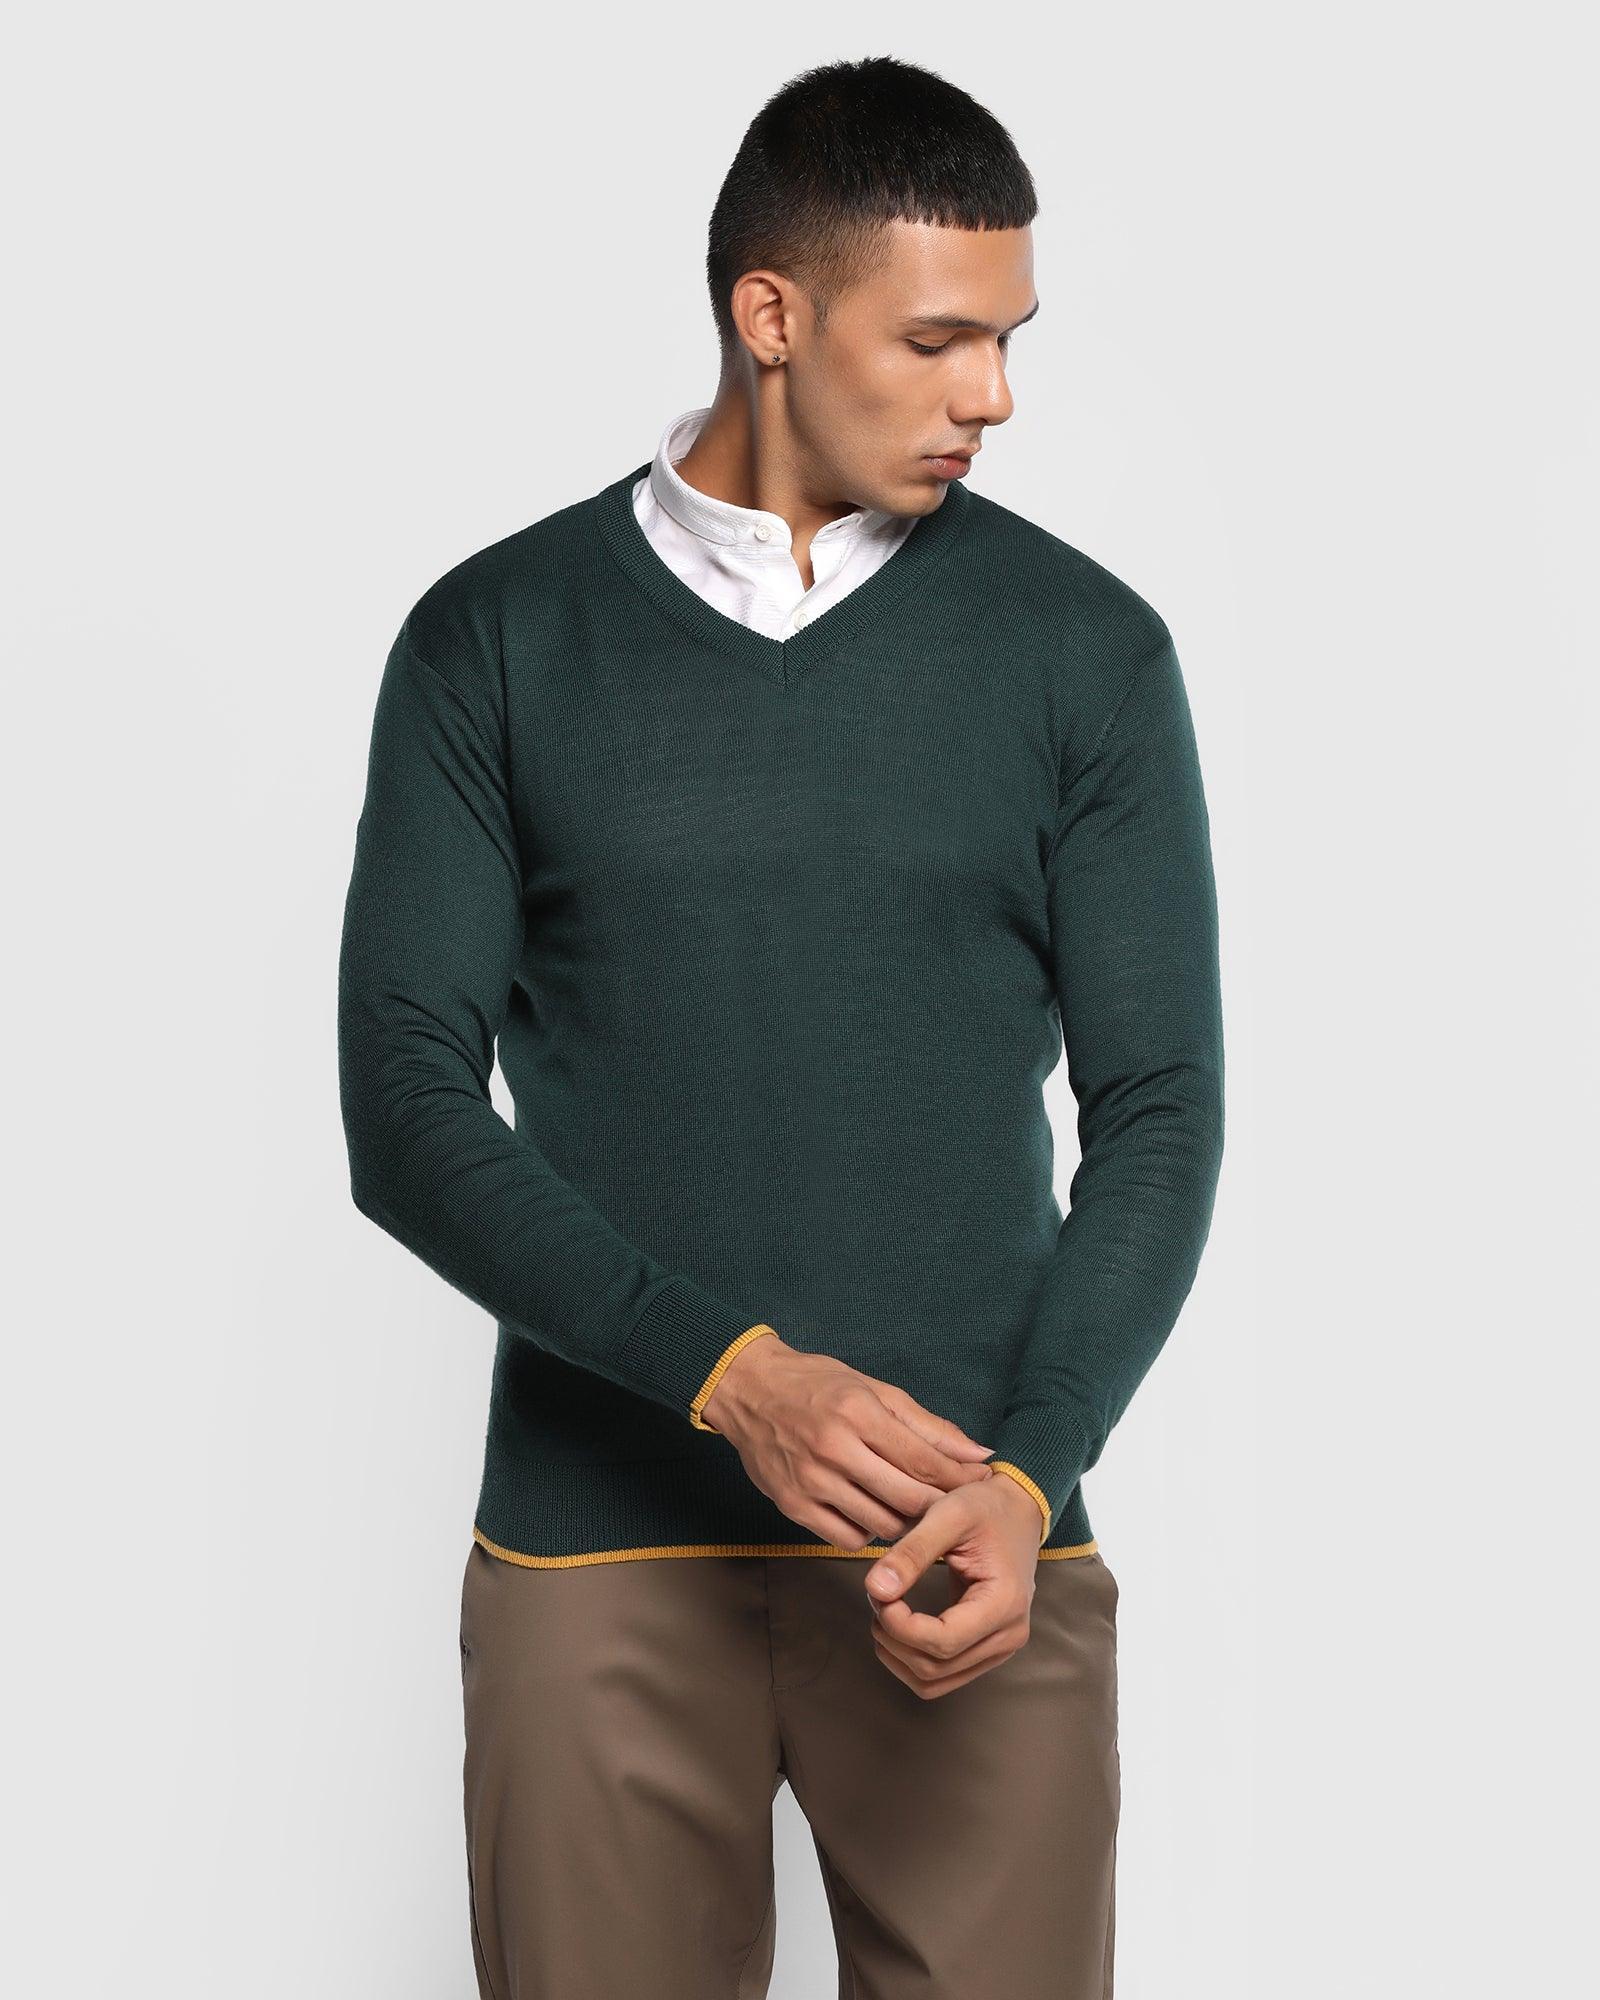 v-neck forest green solid sweater - savior